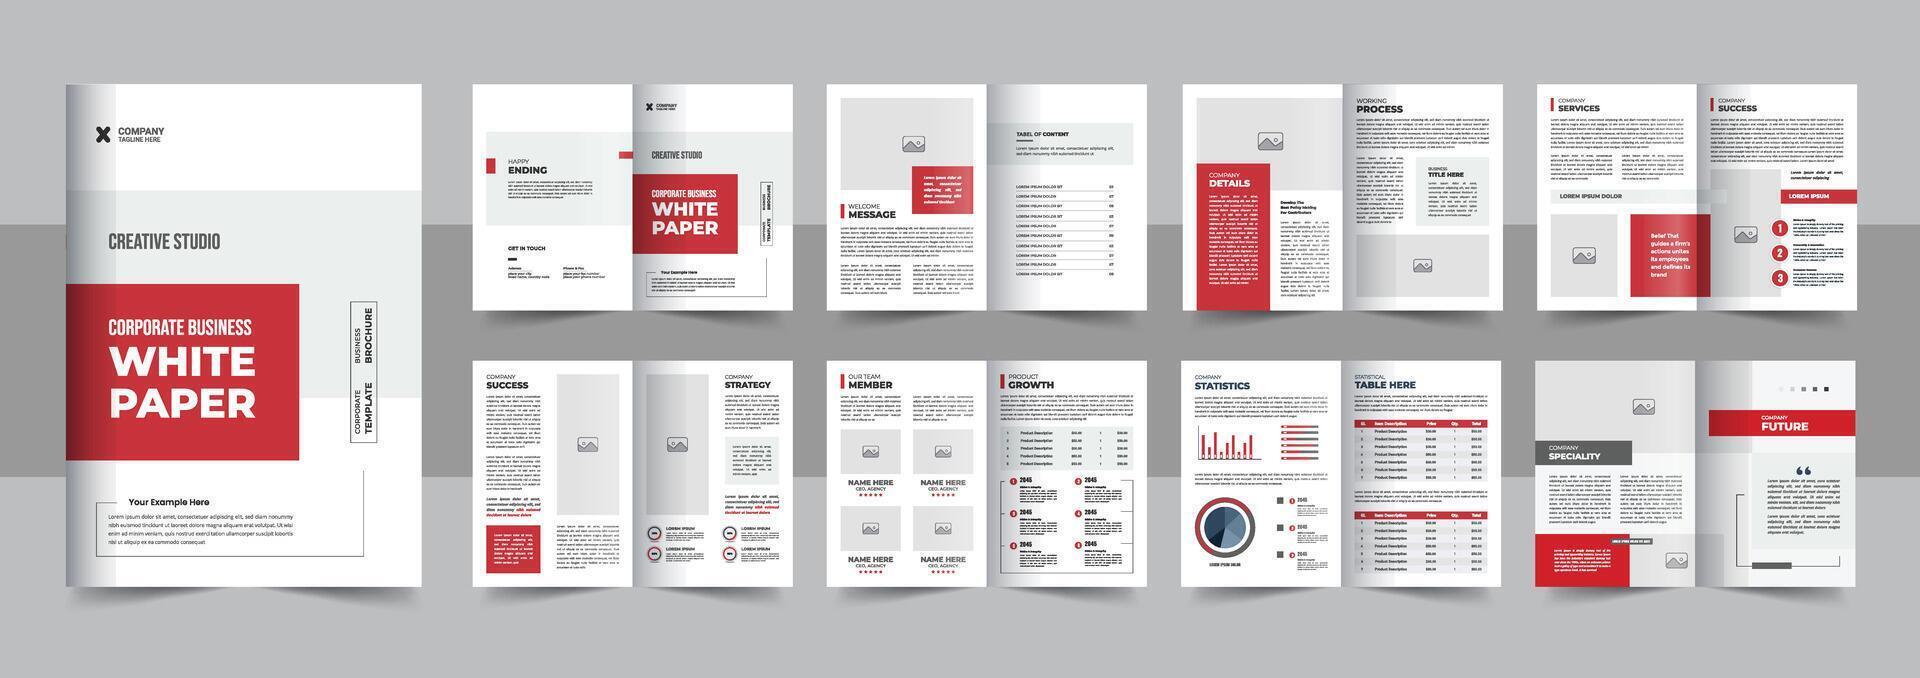 Creative corporate white paper, white paper layout design, Company brochure design template vector